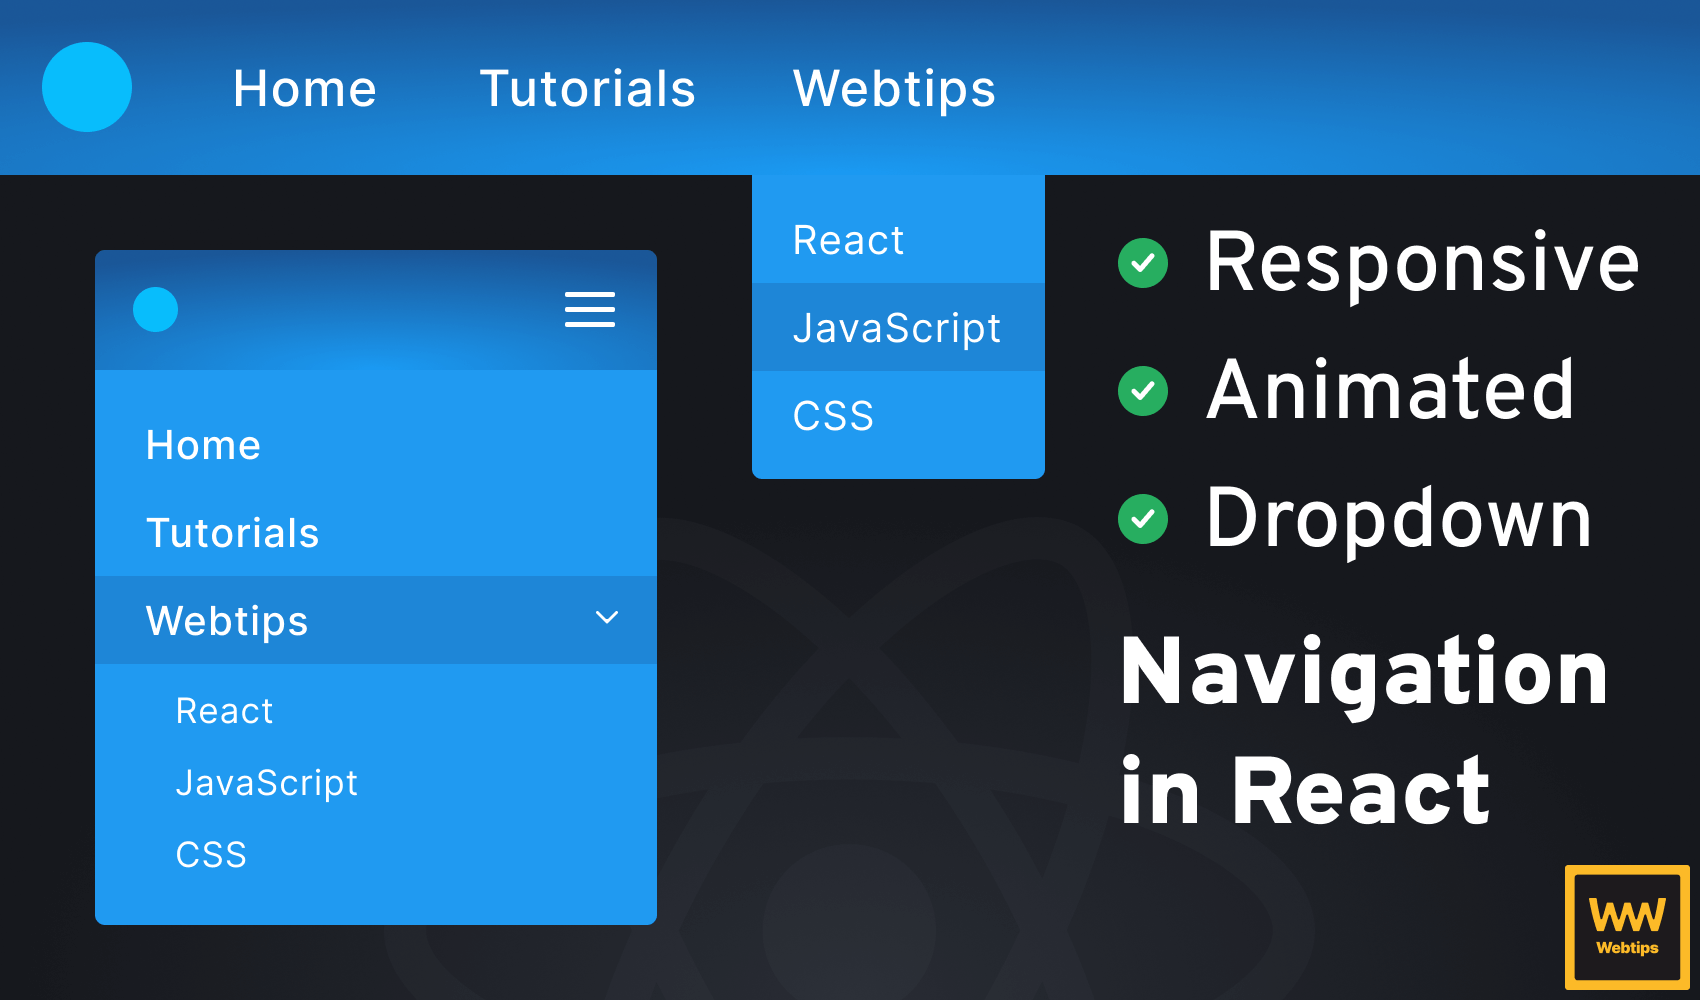 Dropdown menu created in React